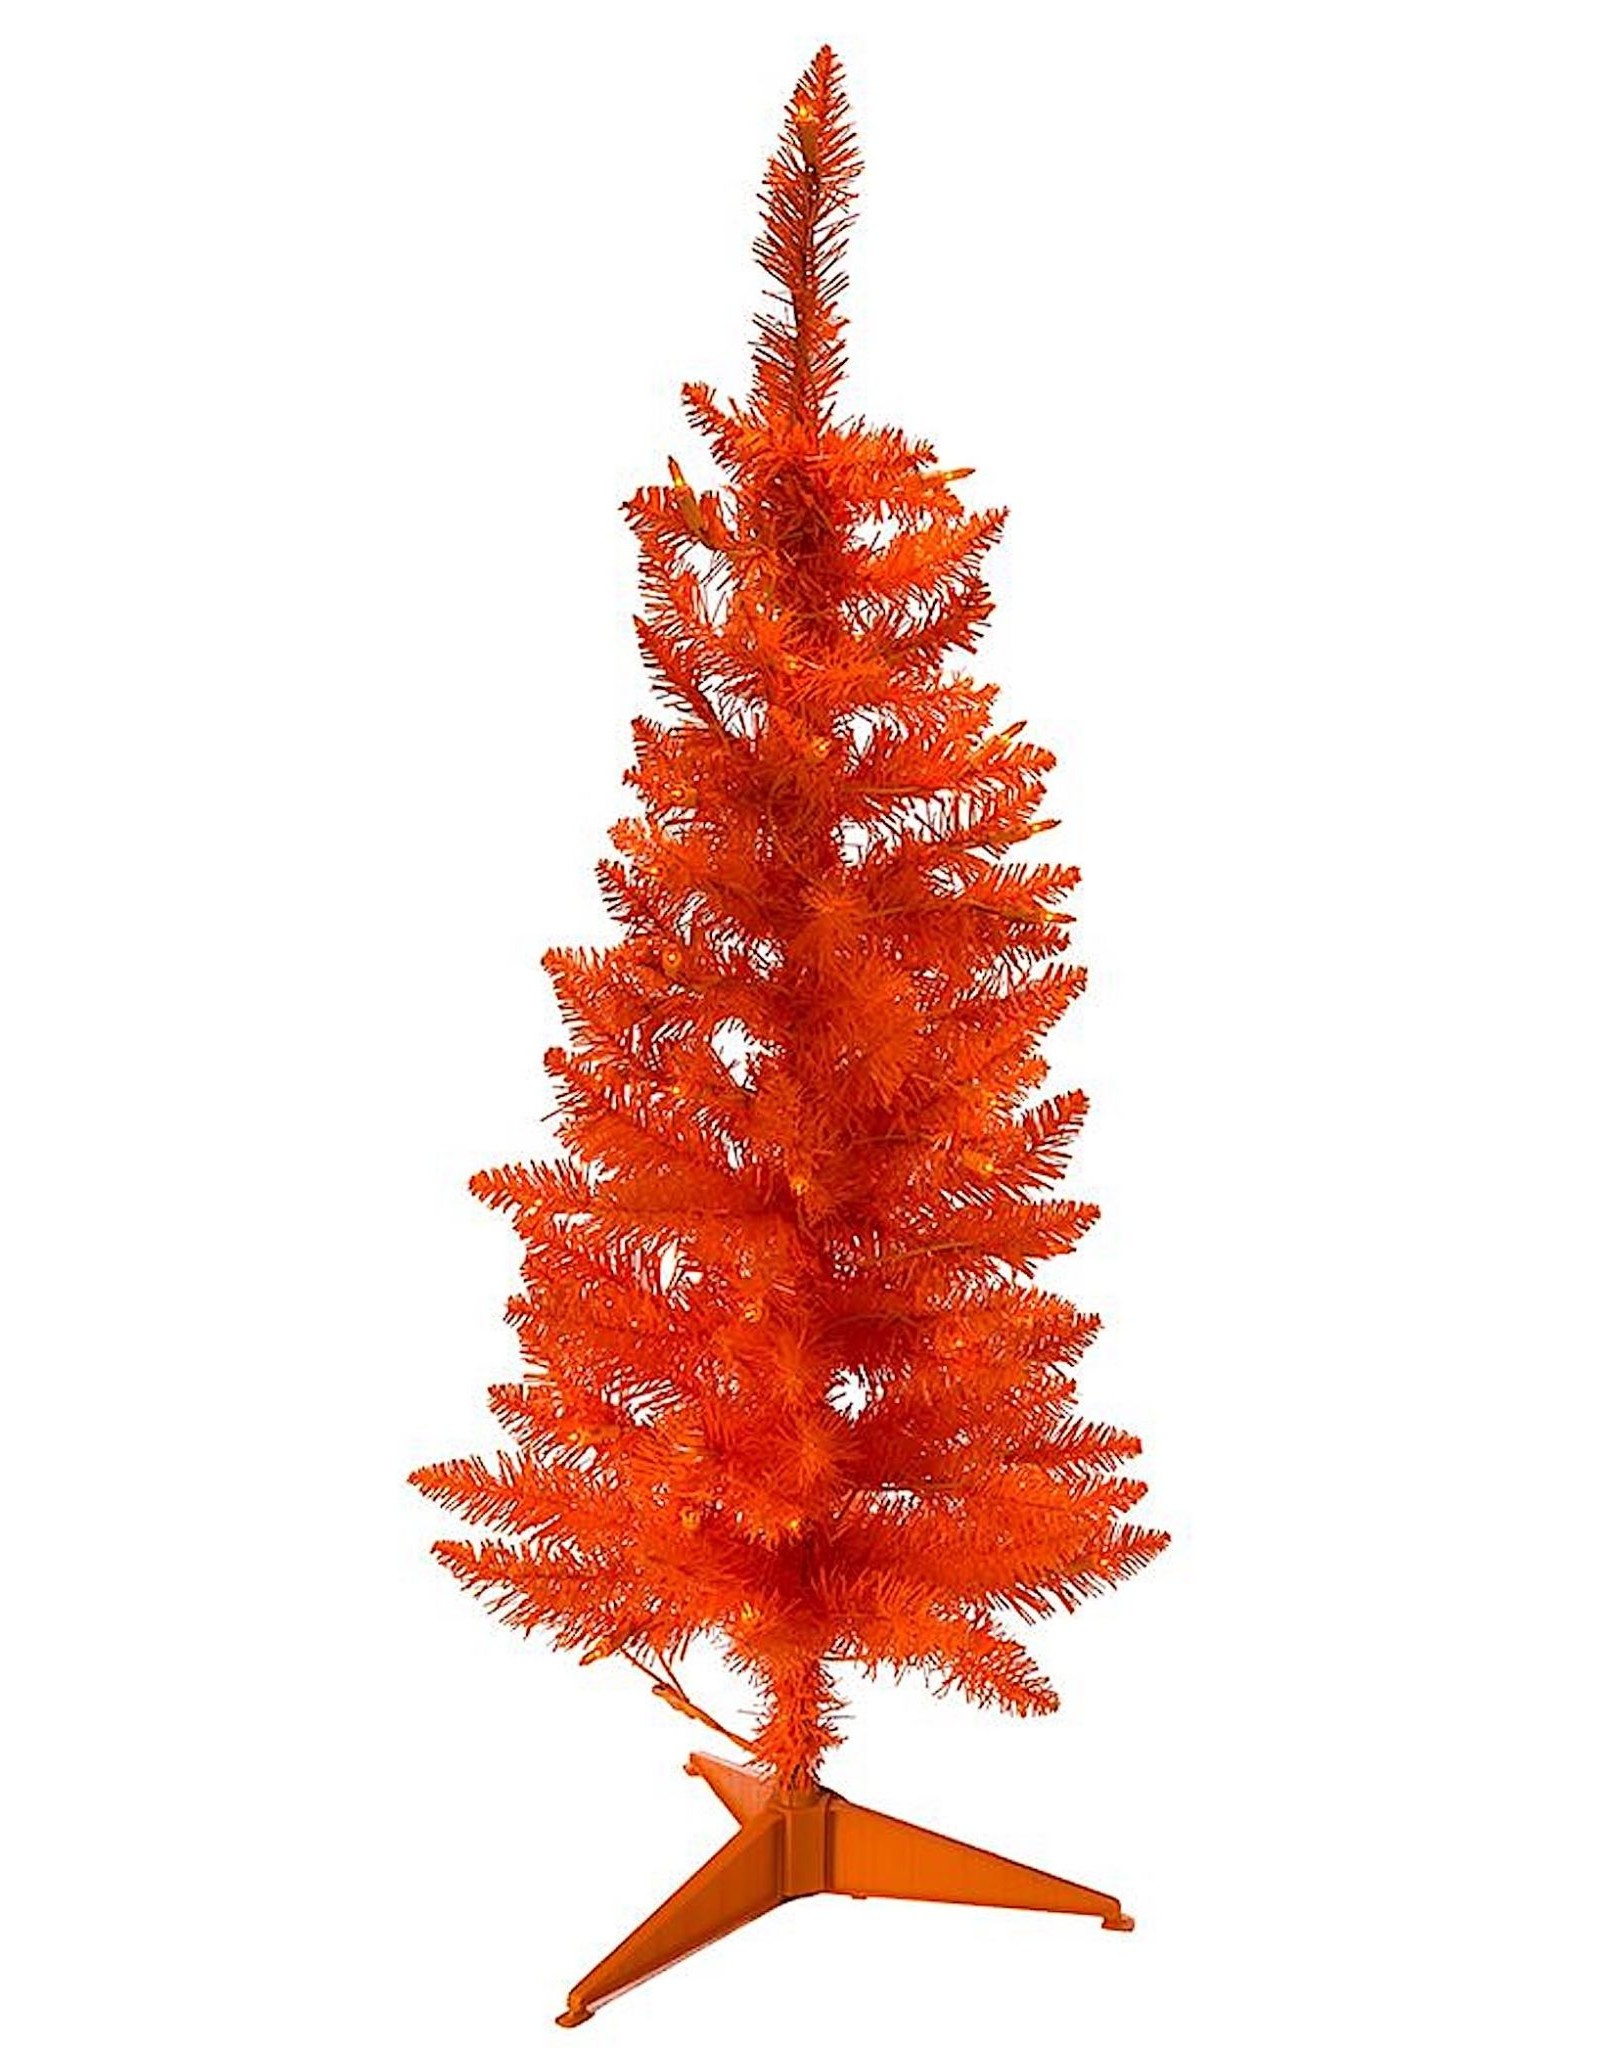 Kurt Adler Pre-Lit Orange Slim Tree 3FT Halloween Christmas Tree